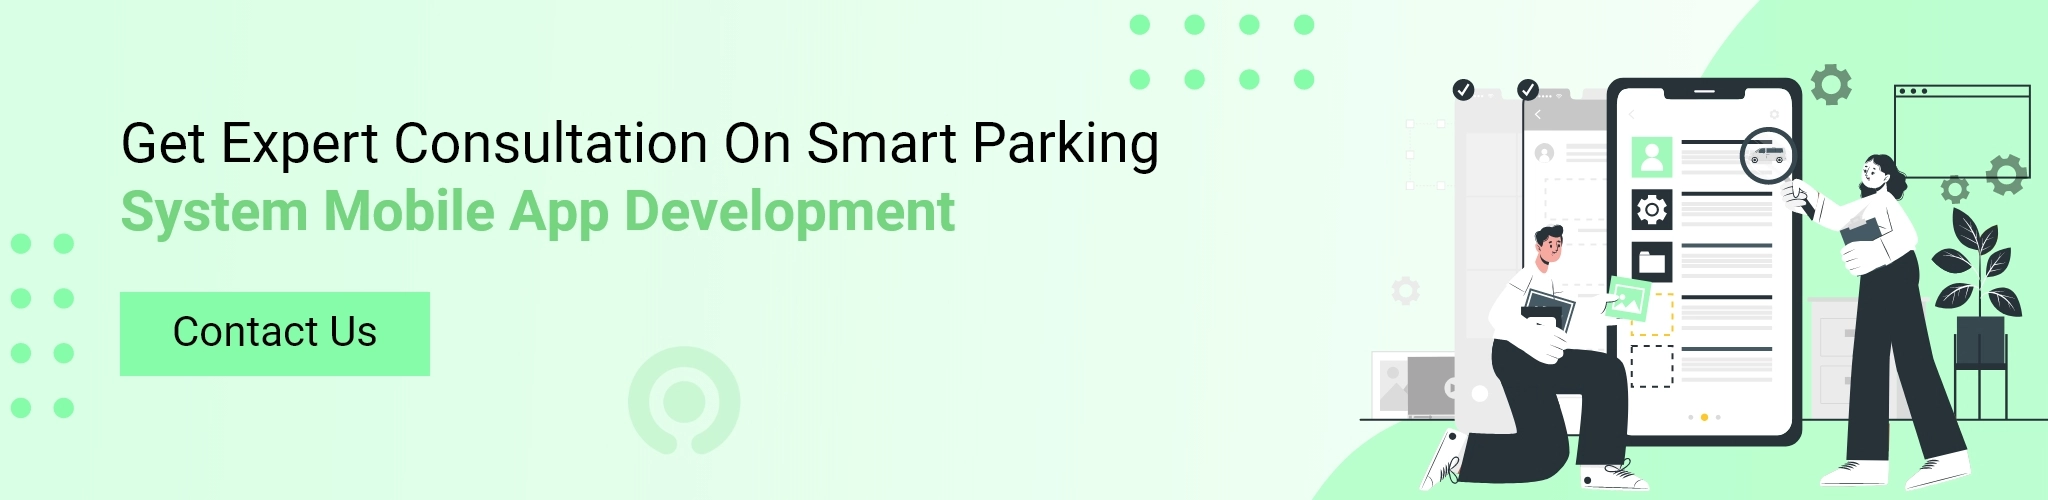 Smart parking cta